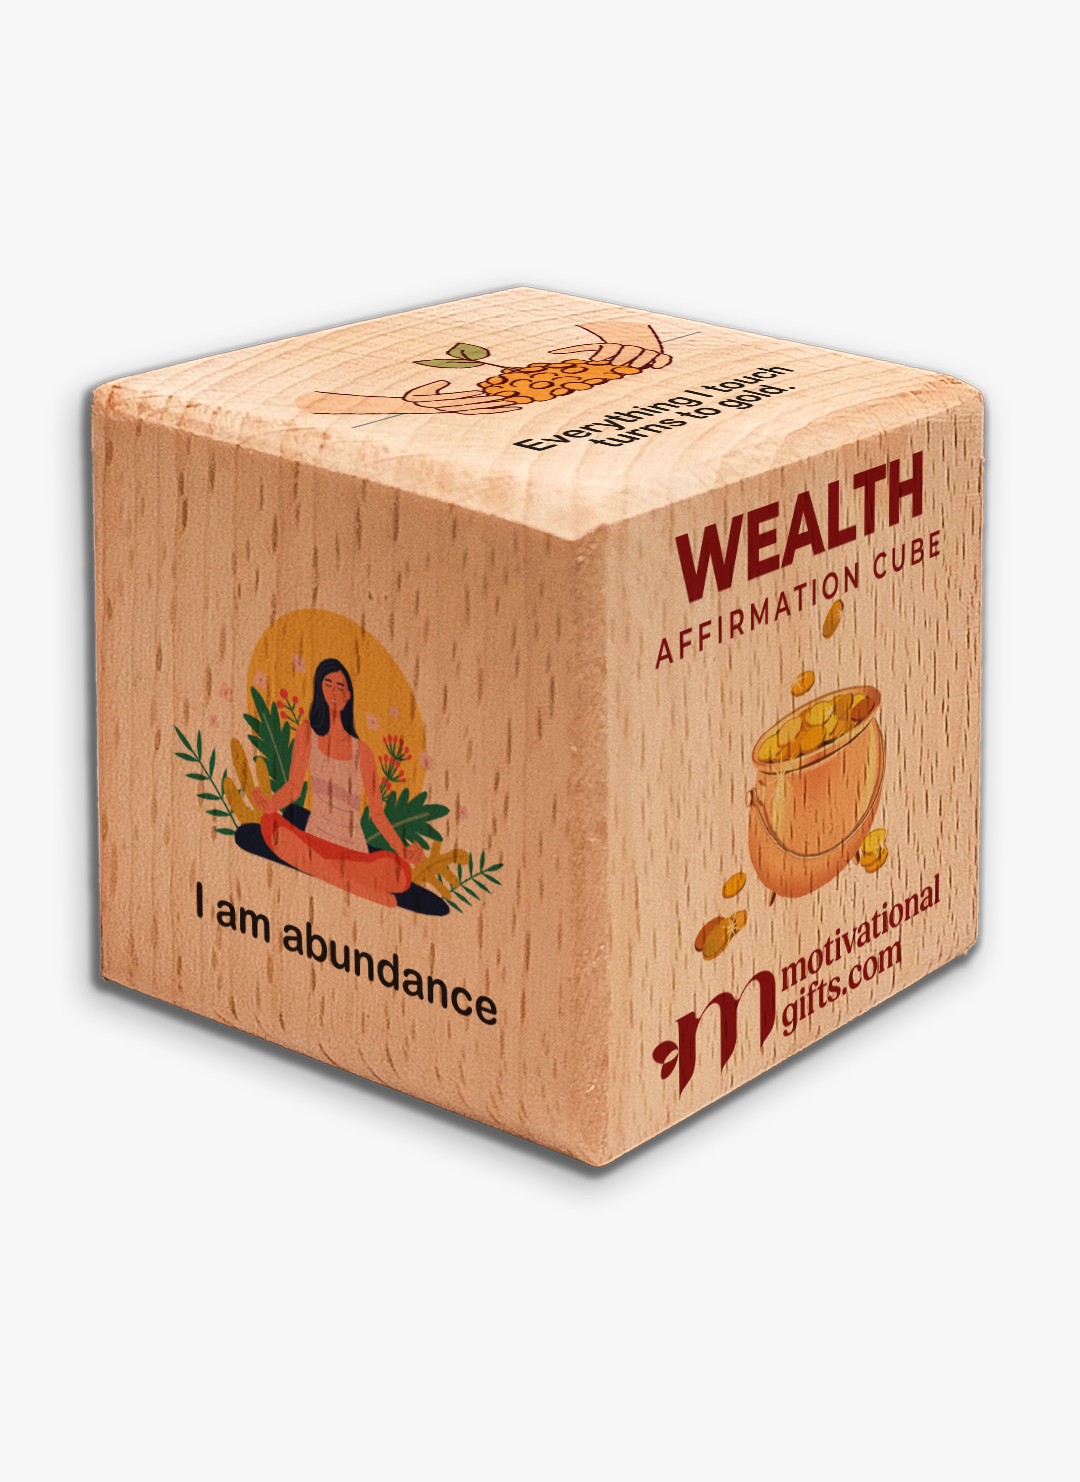 Affirmation Cube: Wealth